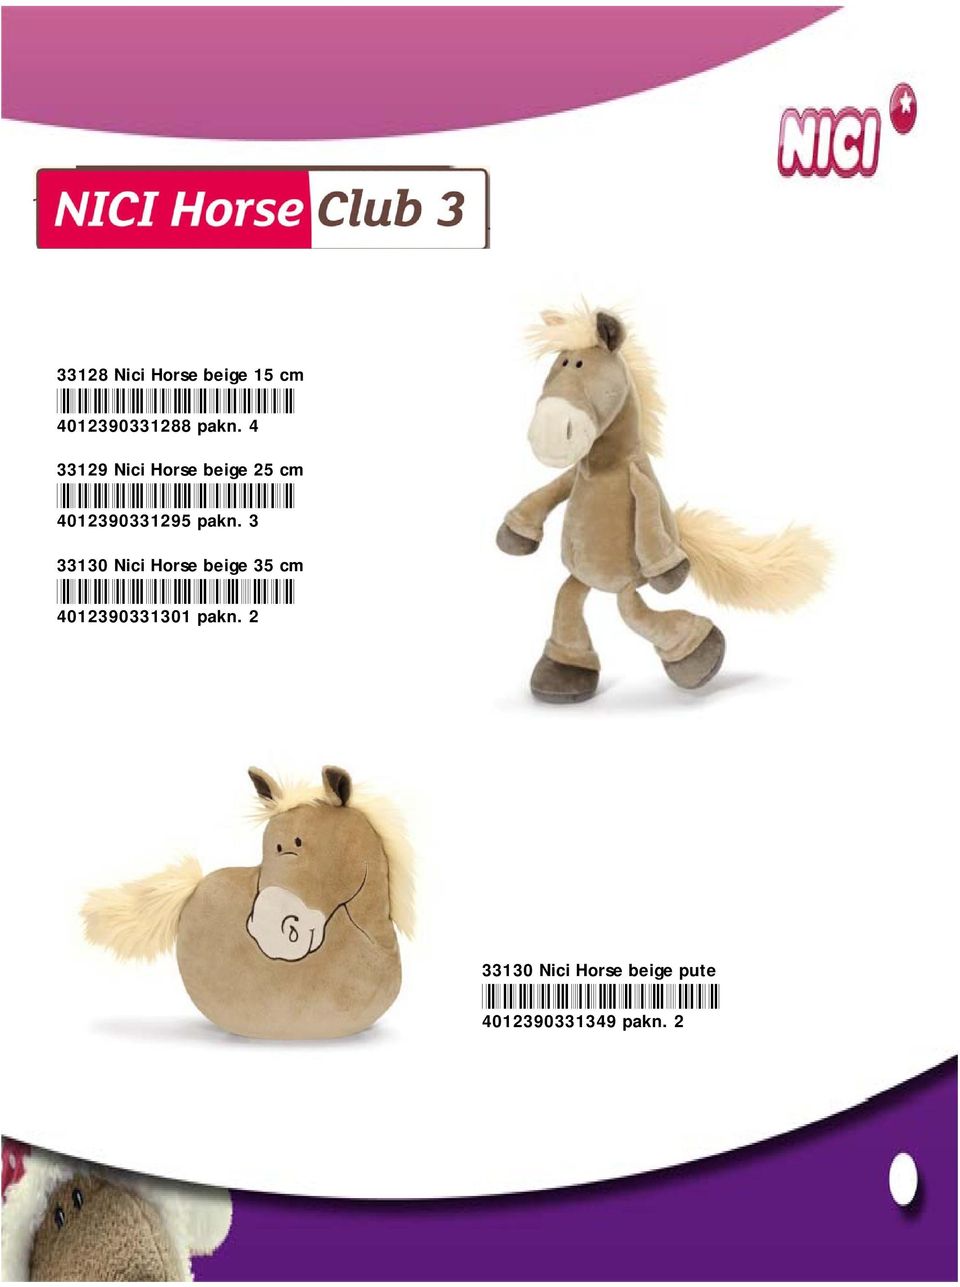 3 33130 Nici Horse beige 35 cm *4012390331301* 4012390331301 pakn.